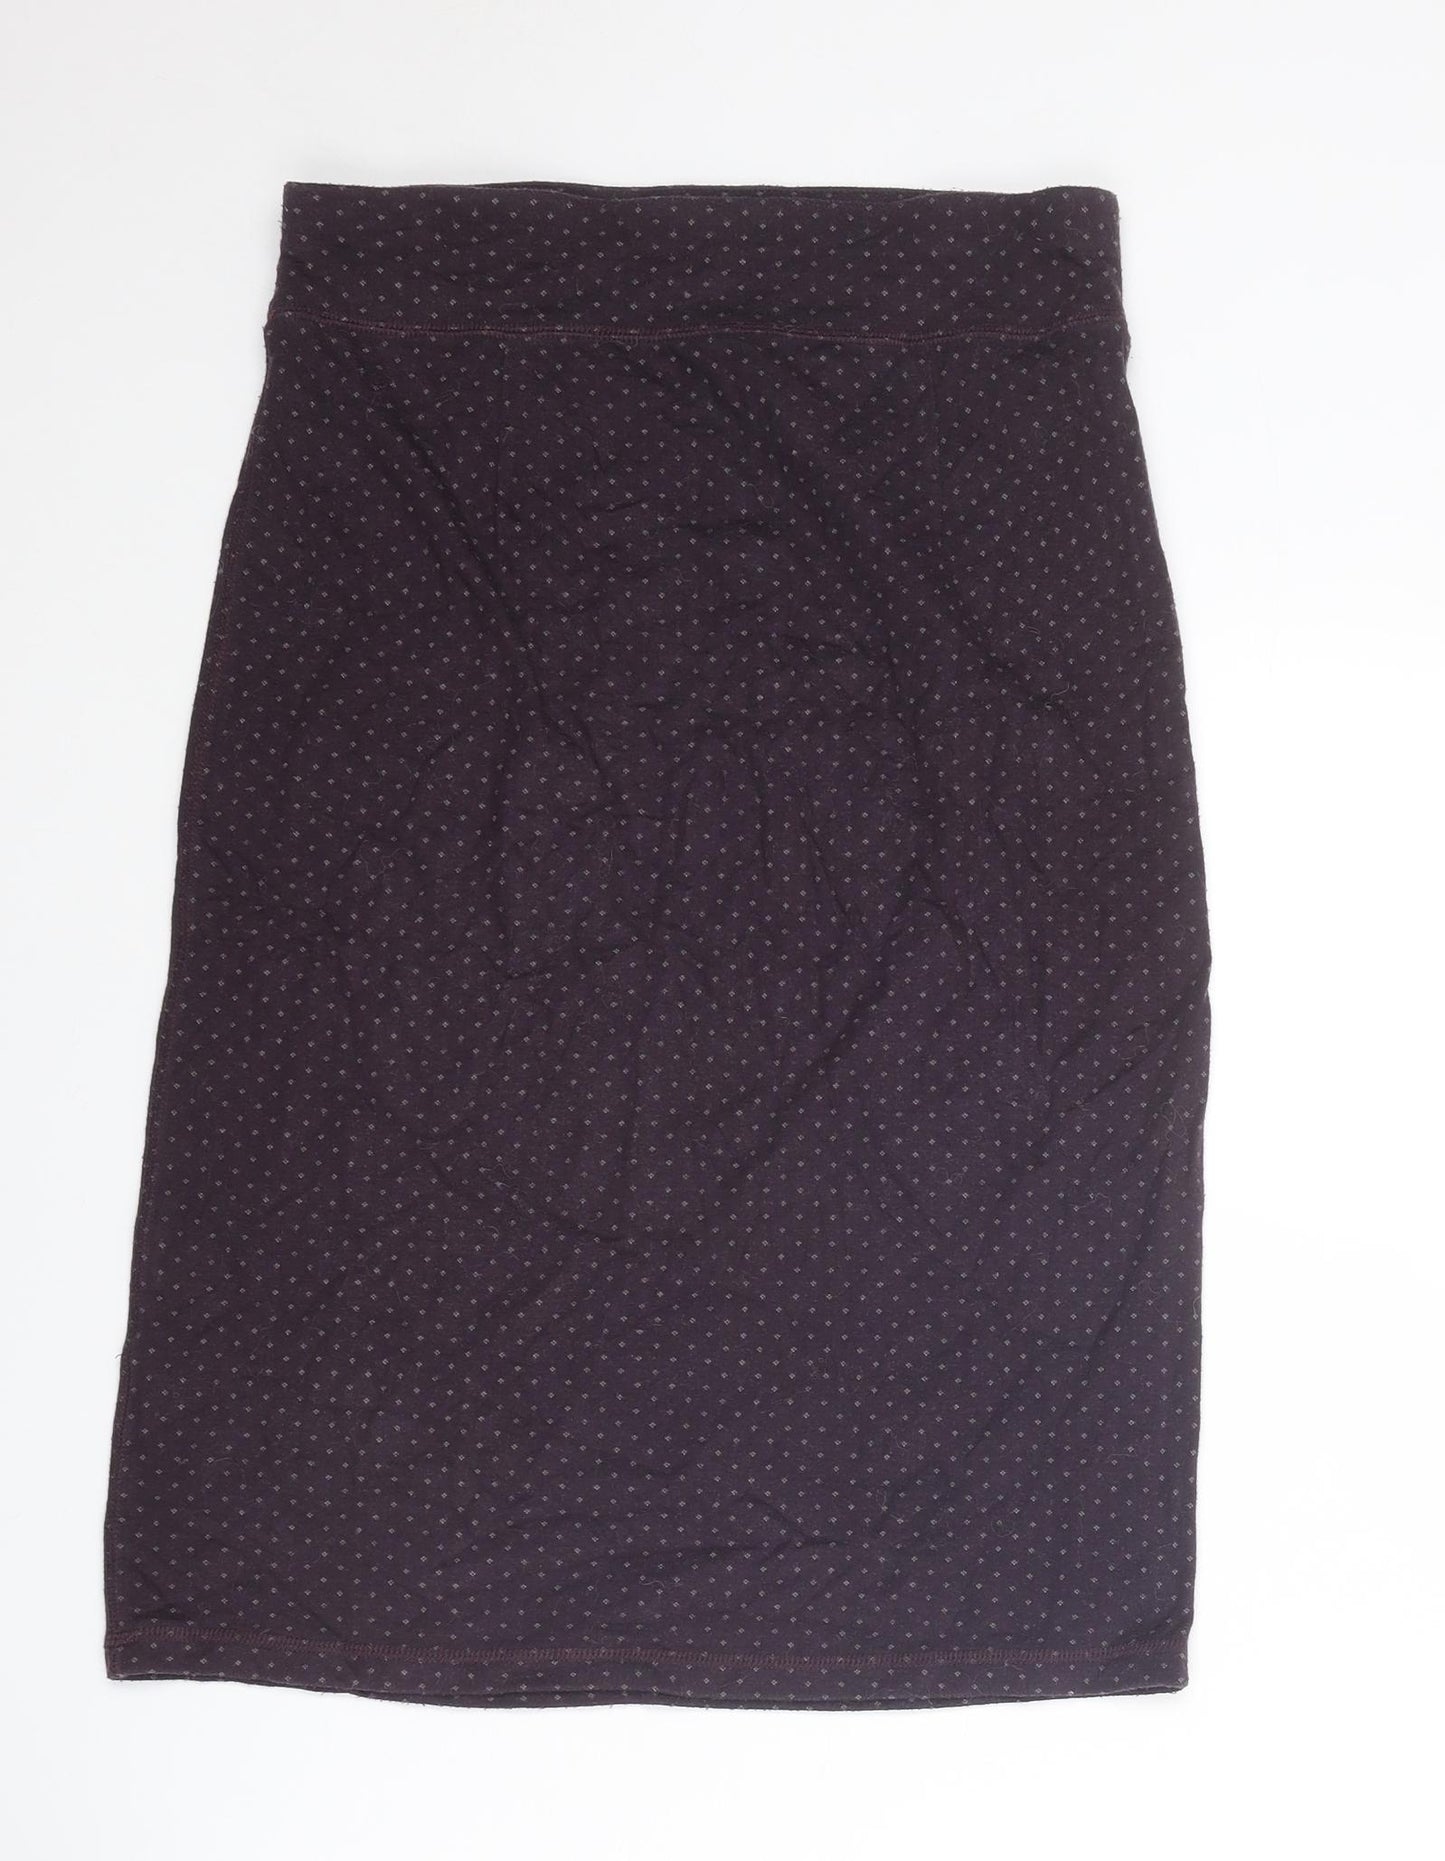 White Stuff Womens Purple Polka Dot Polyester A-Line Skirt Size 10